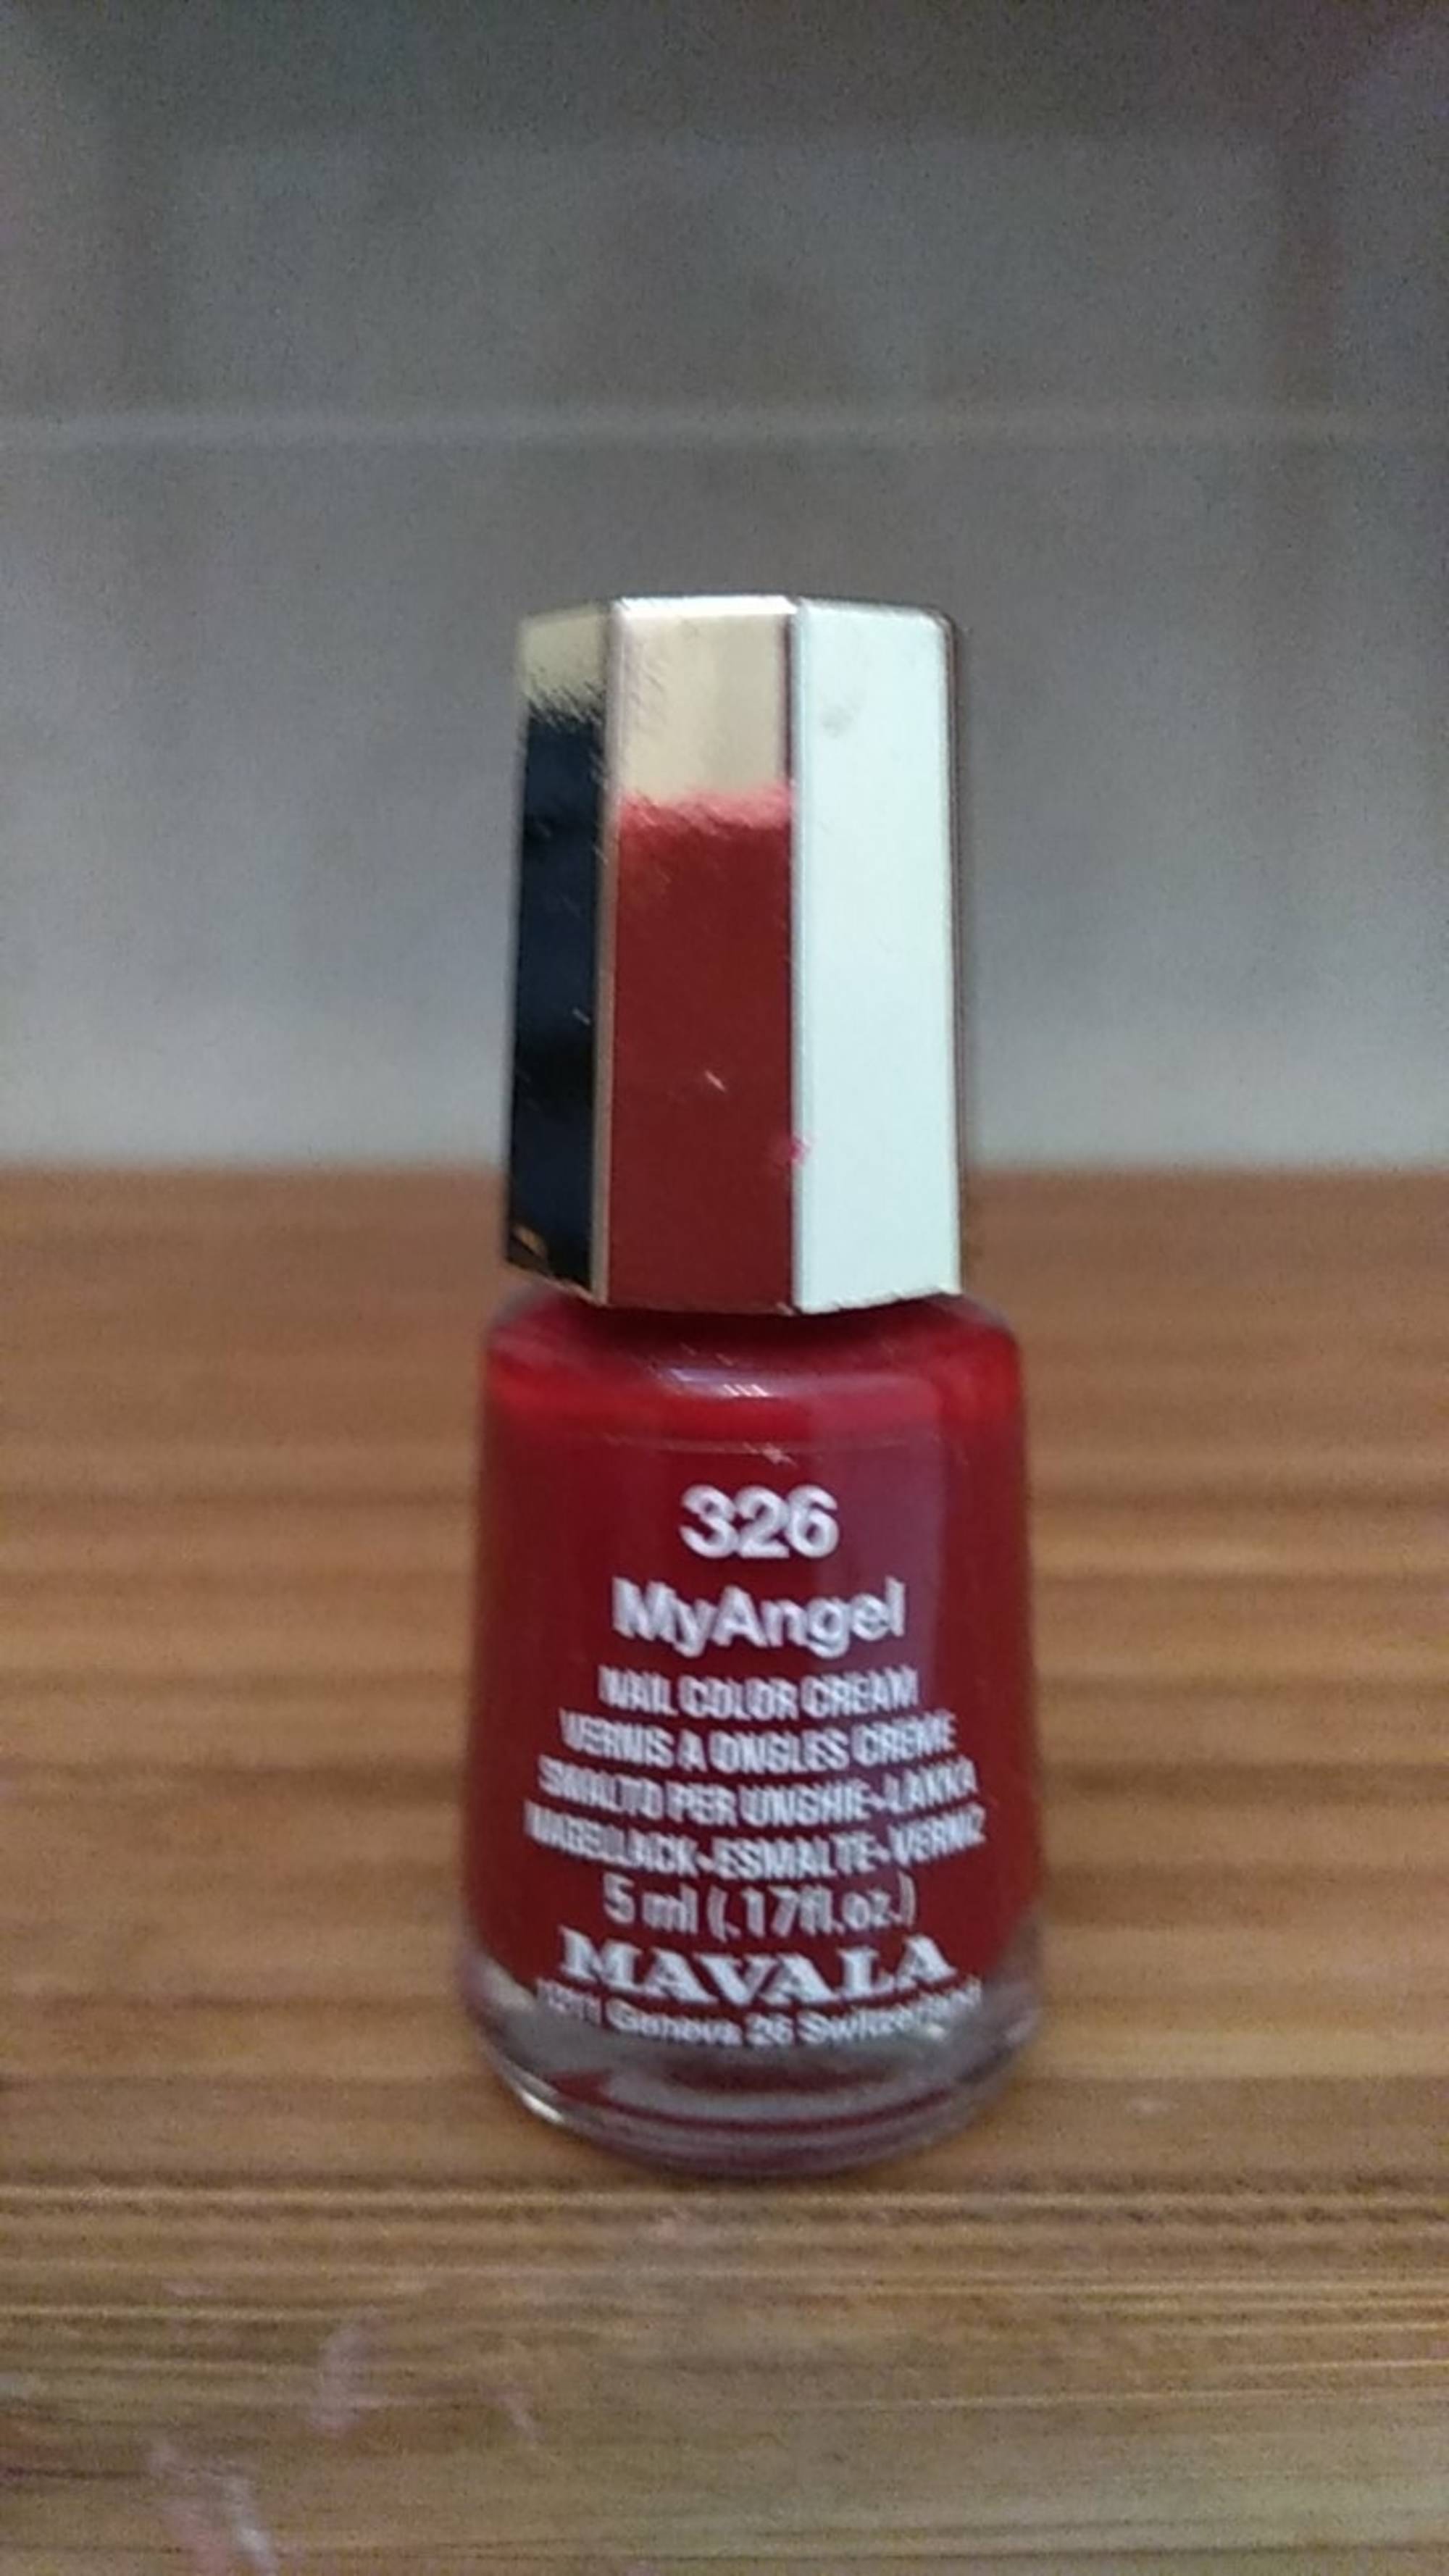 MAVALA - 326 MyAngel - Vernis à ongles crème